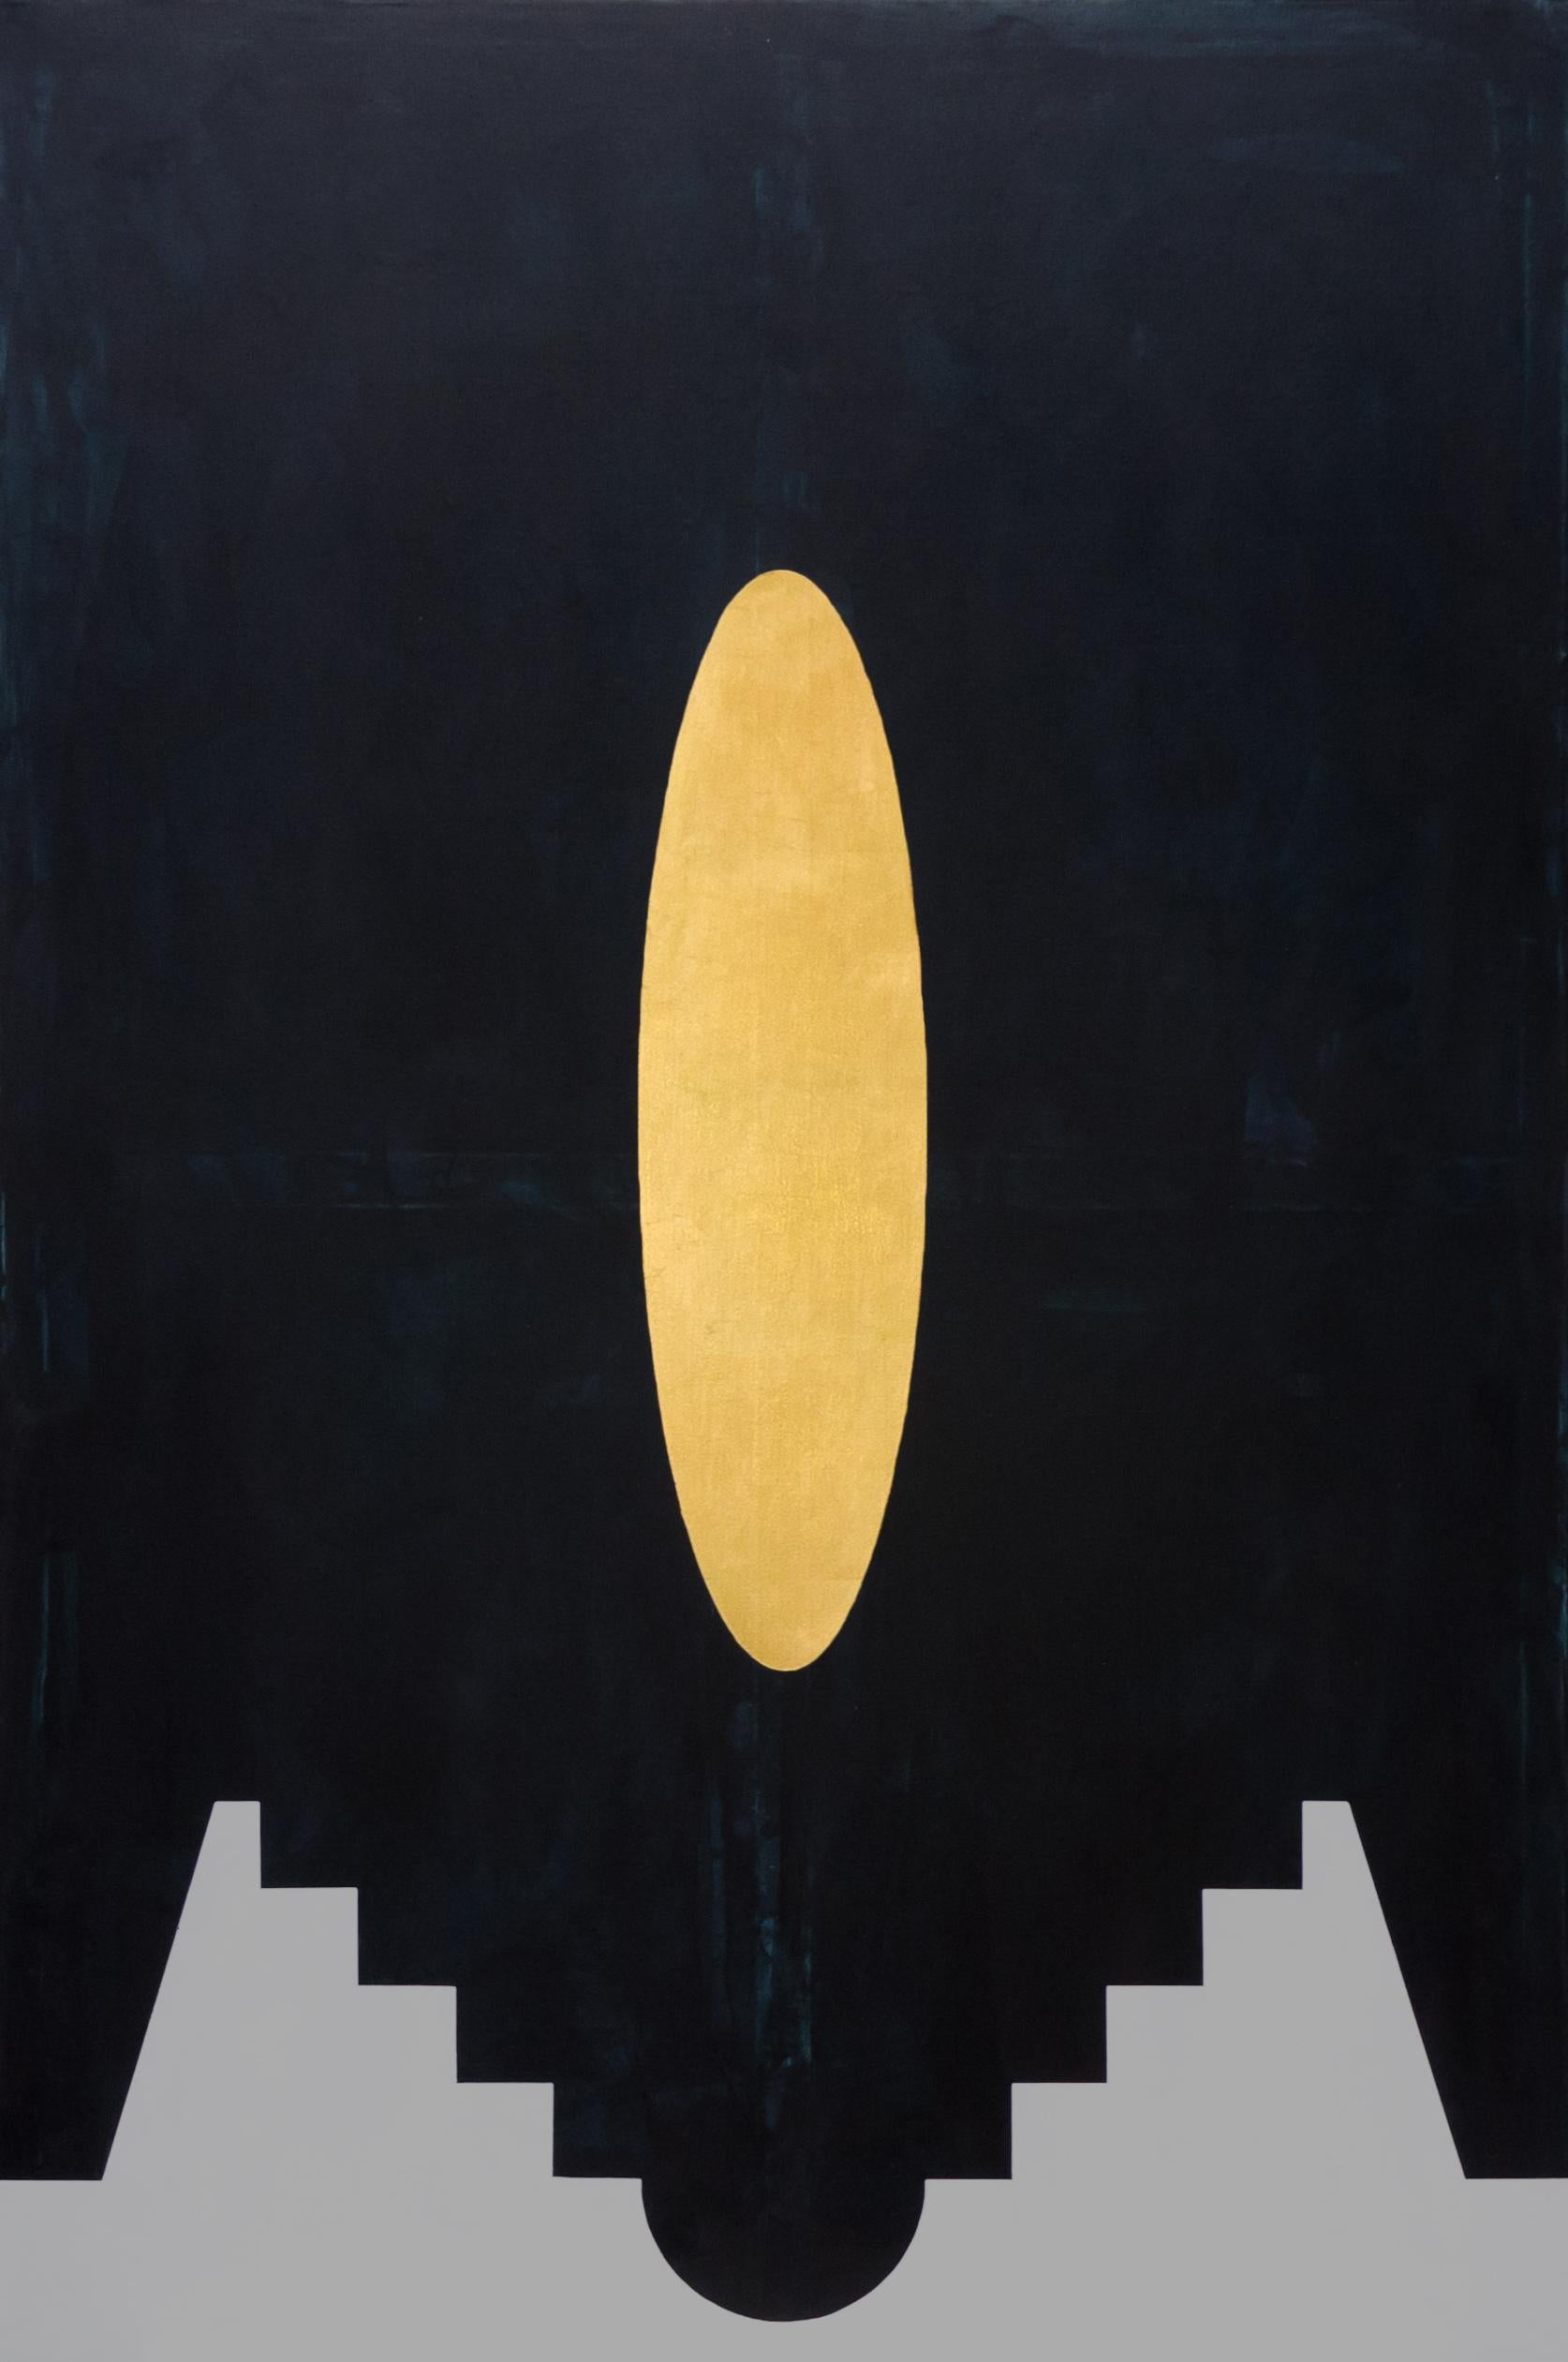 Abstract Painting Alejandro Legorreta  - El Xitle, Art contemporain, Peinture abstraite, 21ème siècle